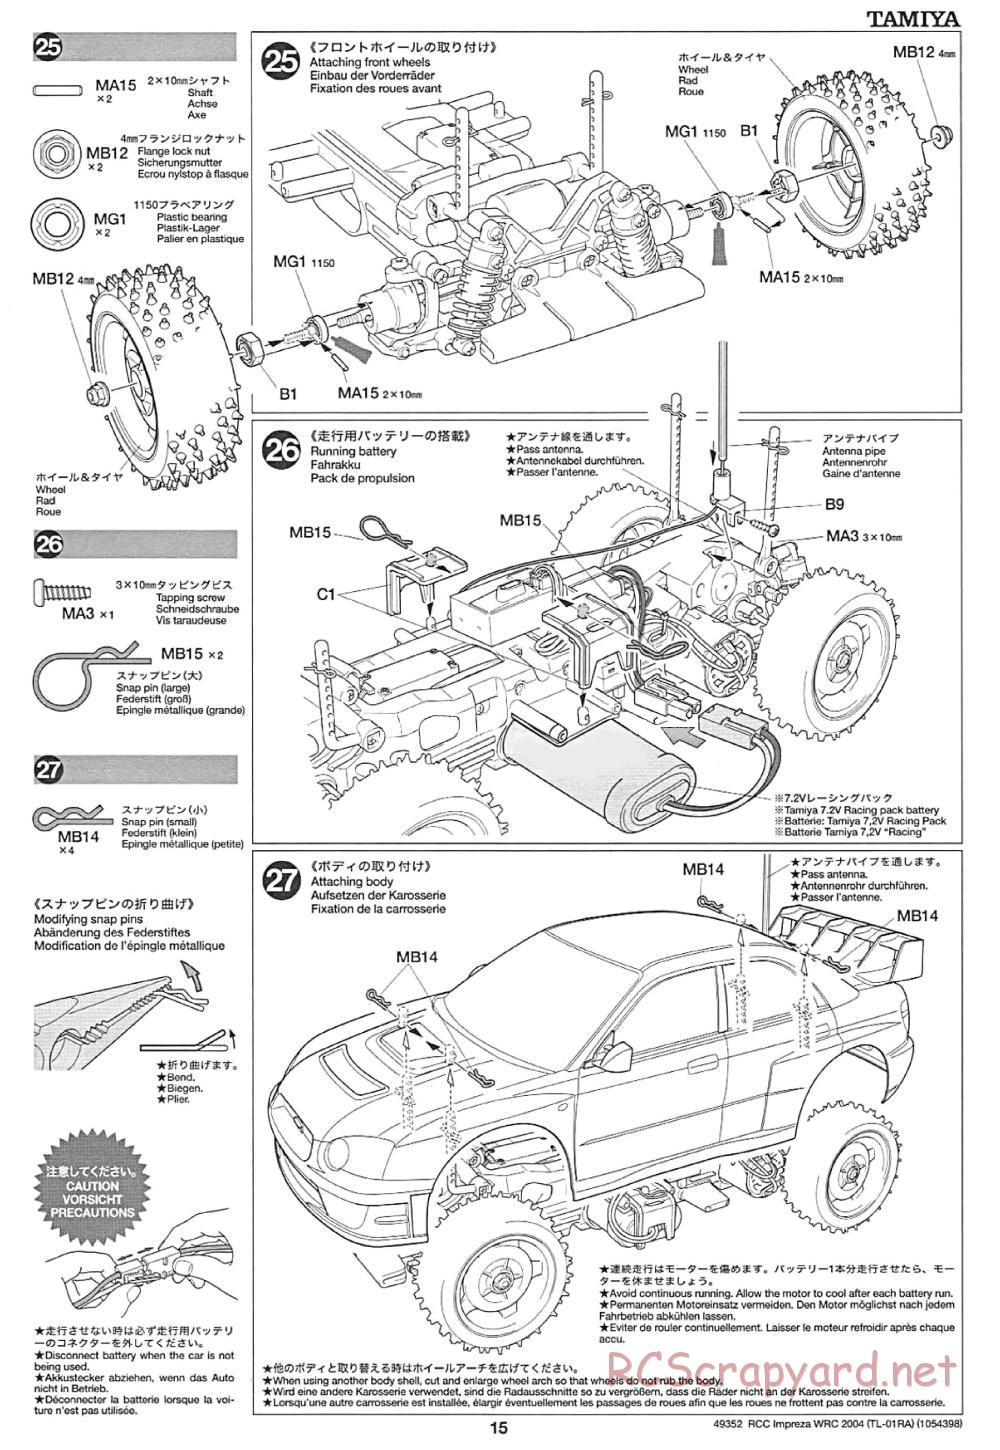 Tamiya - Subaru Impreza WRC 2004 Chassis - Manual - Page 15